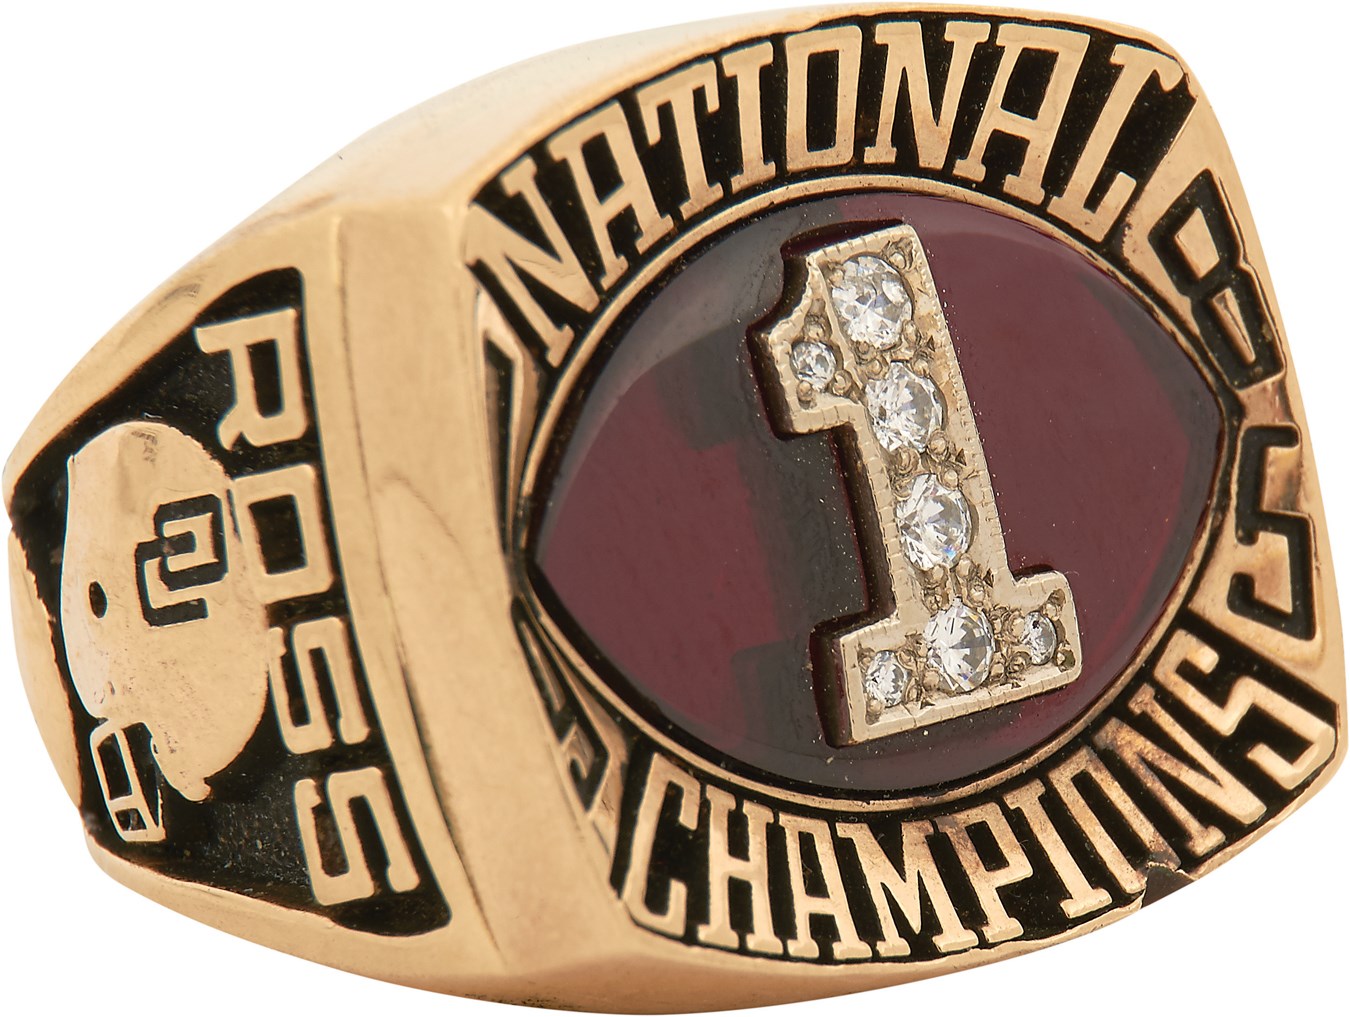 - 1985 Oklahoma Sooners National Championship Ring